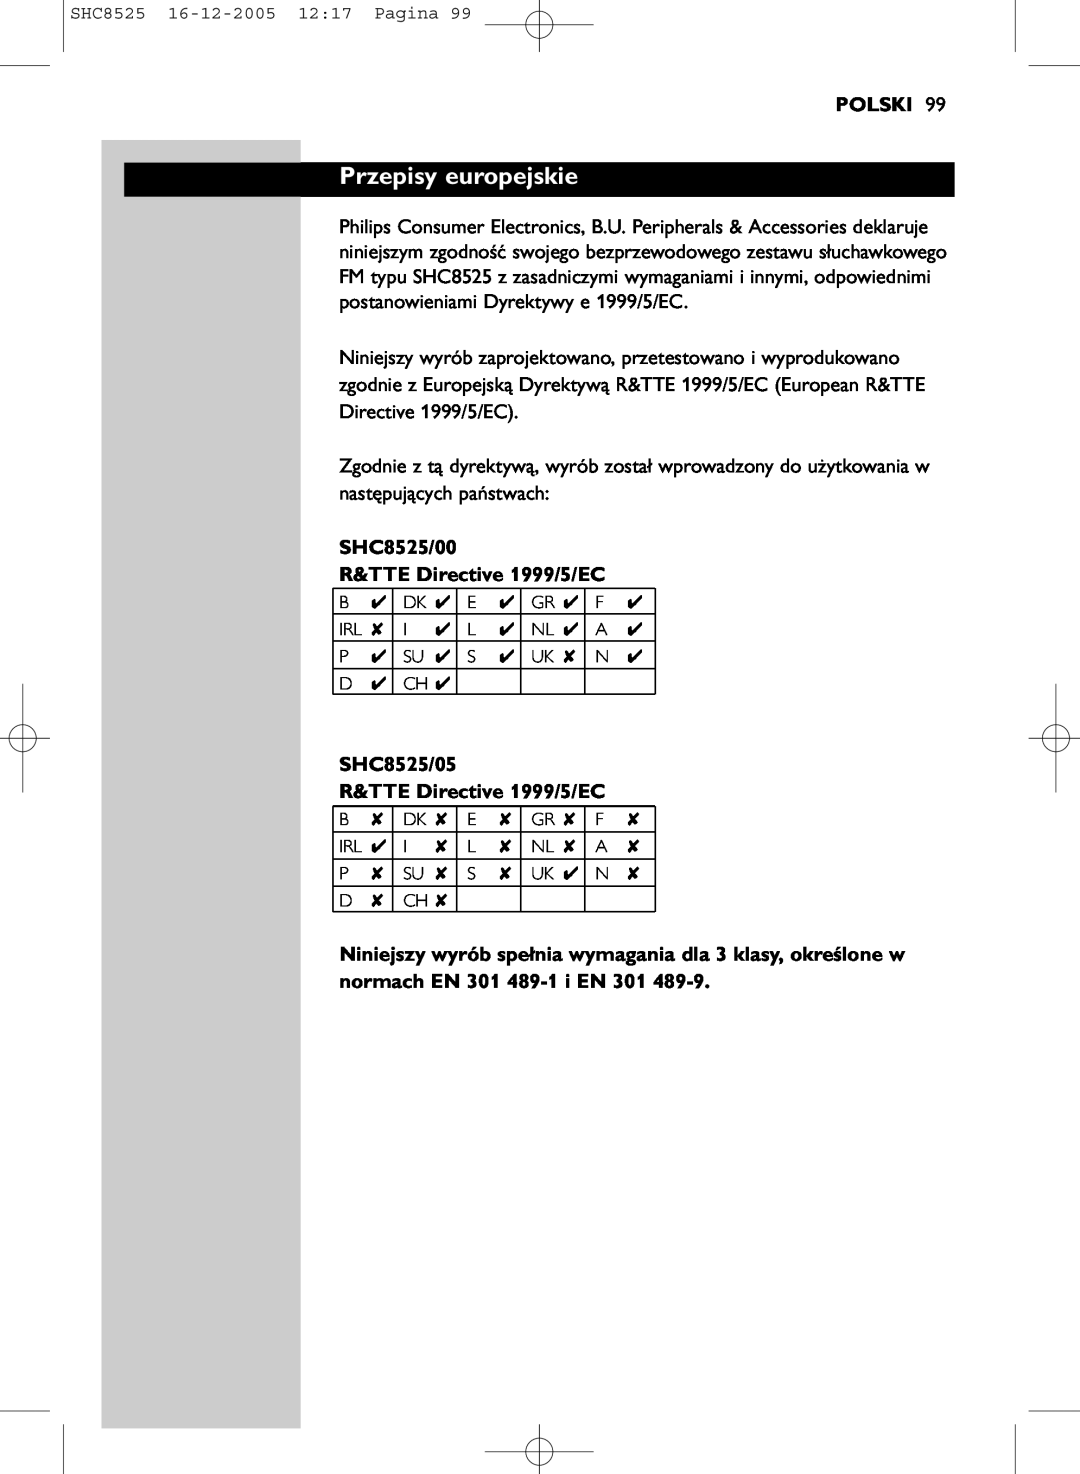 Event electronic manual Przepisy europejskie, Polski, SHC8525/00 R&TTE Directive 1999/5/EC 